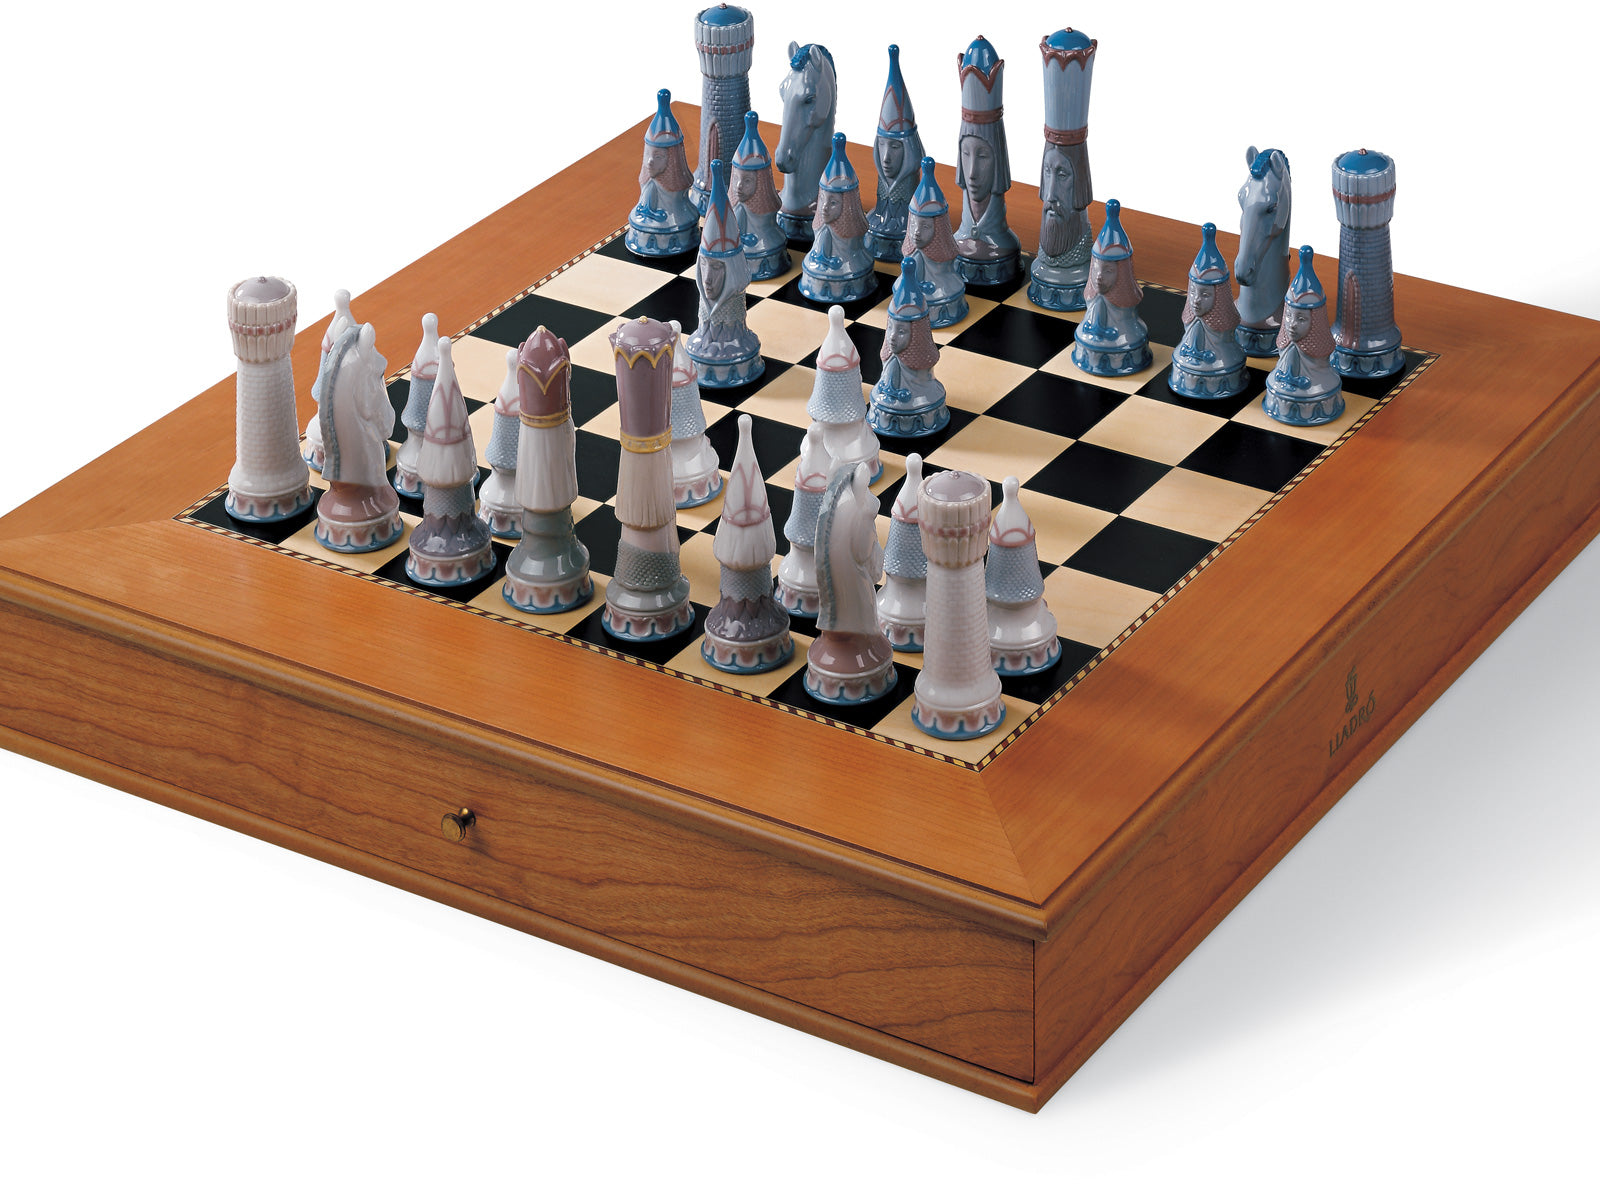 Luxury Unique Chess Set Handmade Murano Glass Chess Board and 